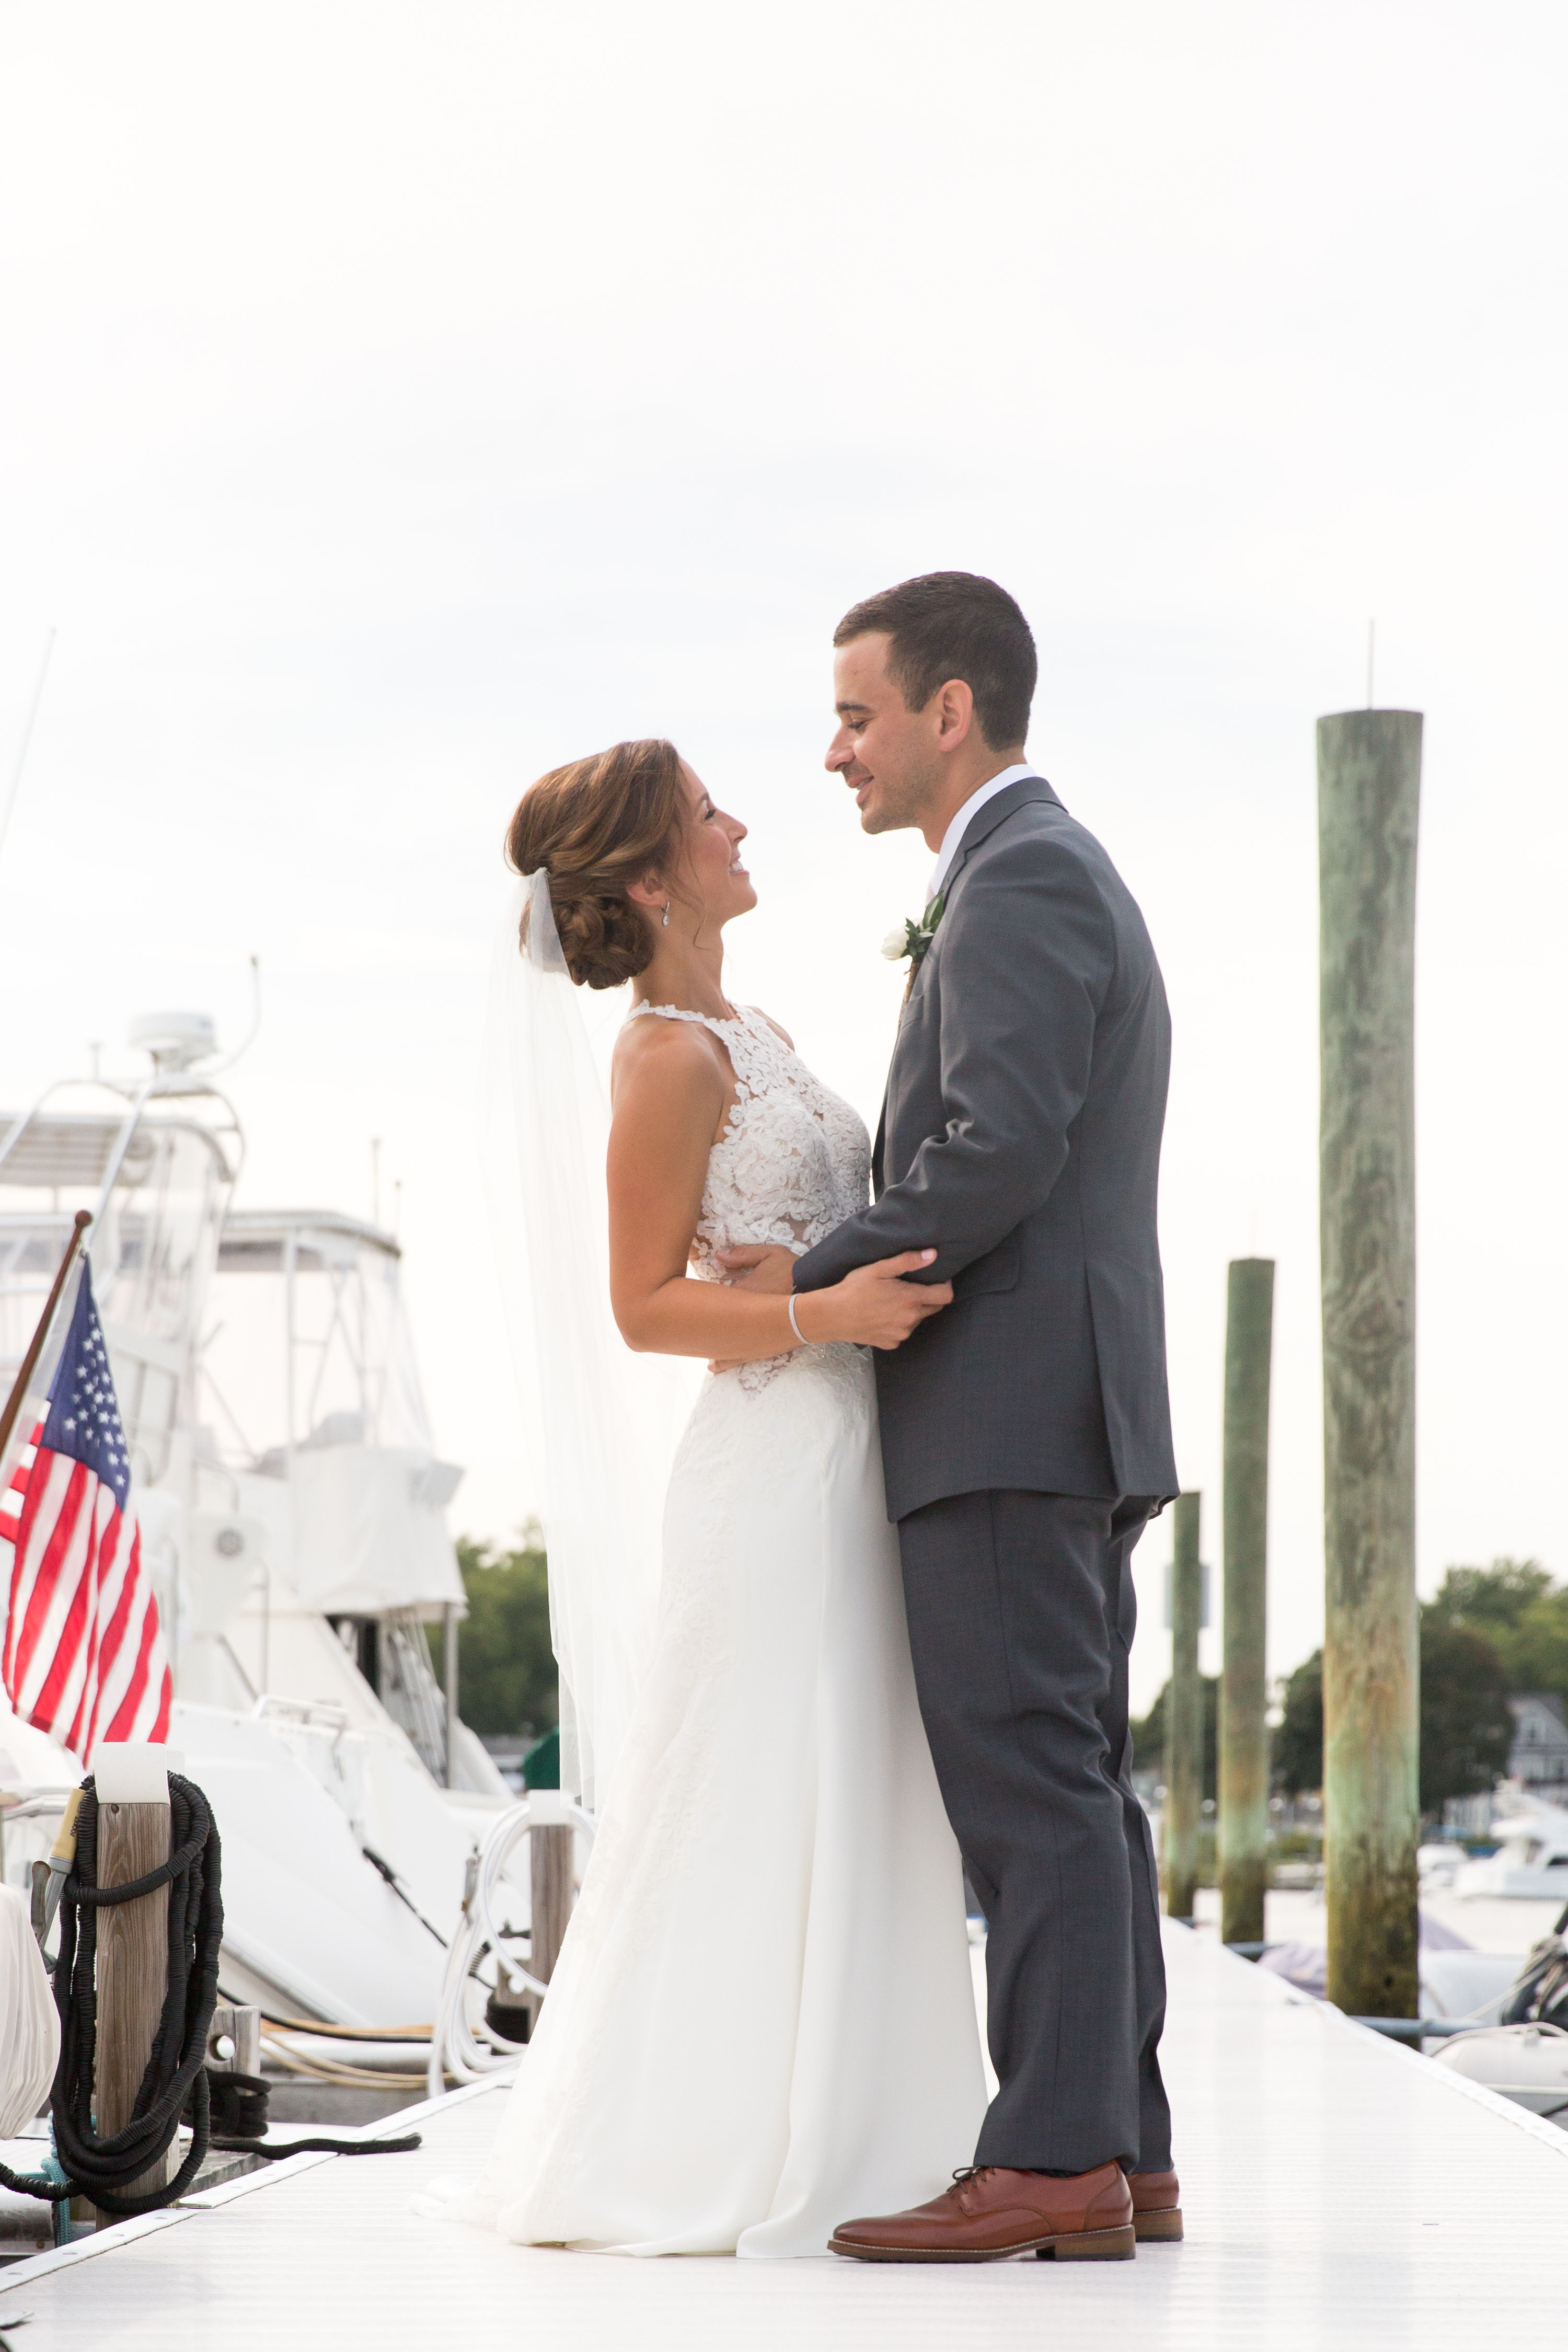 Bride and groom pause together on the docks at Rhode Island wedding venue, Harbor Lights.